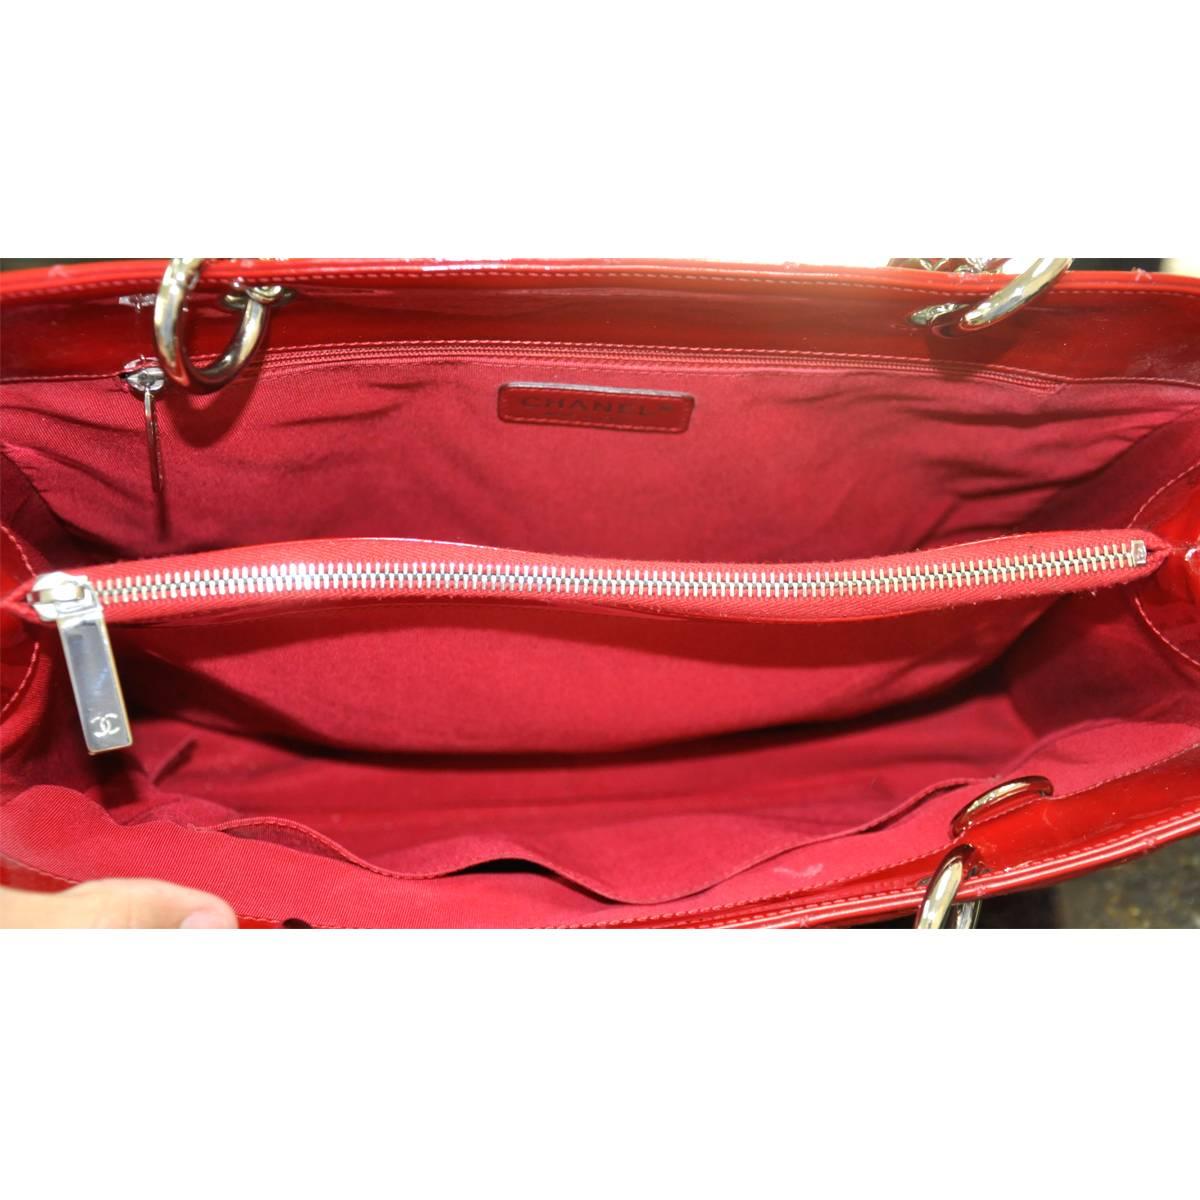 Chanel Red Patent Leather Grand Shopper Tote GST Handbag 2